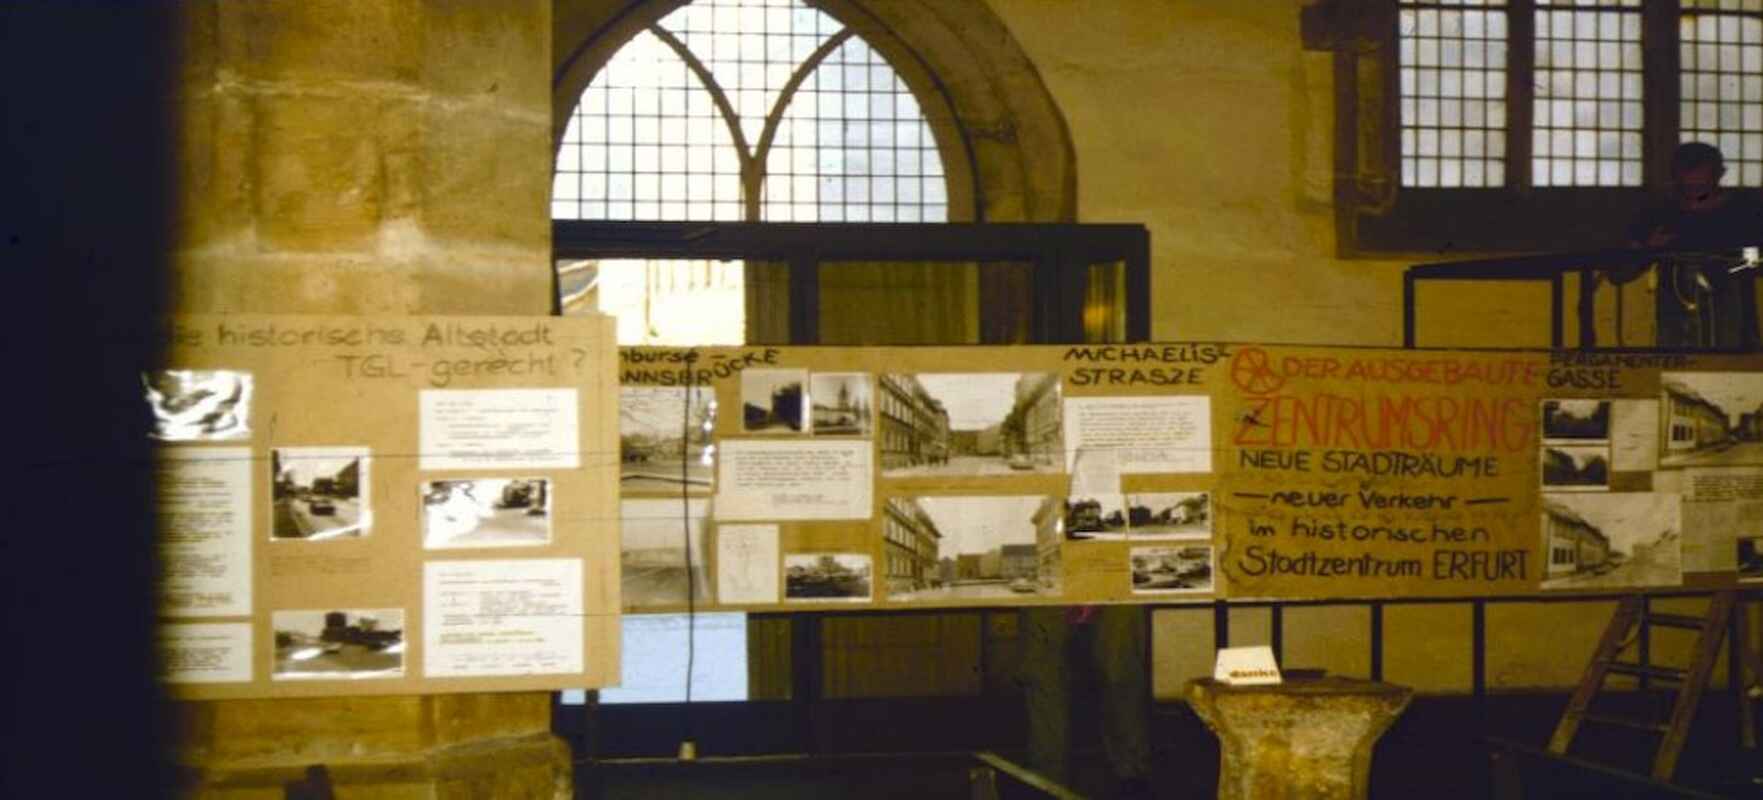 Ausstellung in der Andreaskirche 1987.